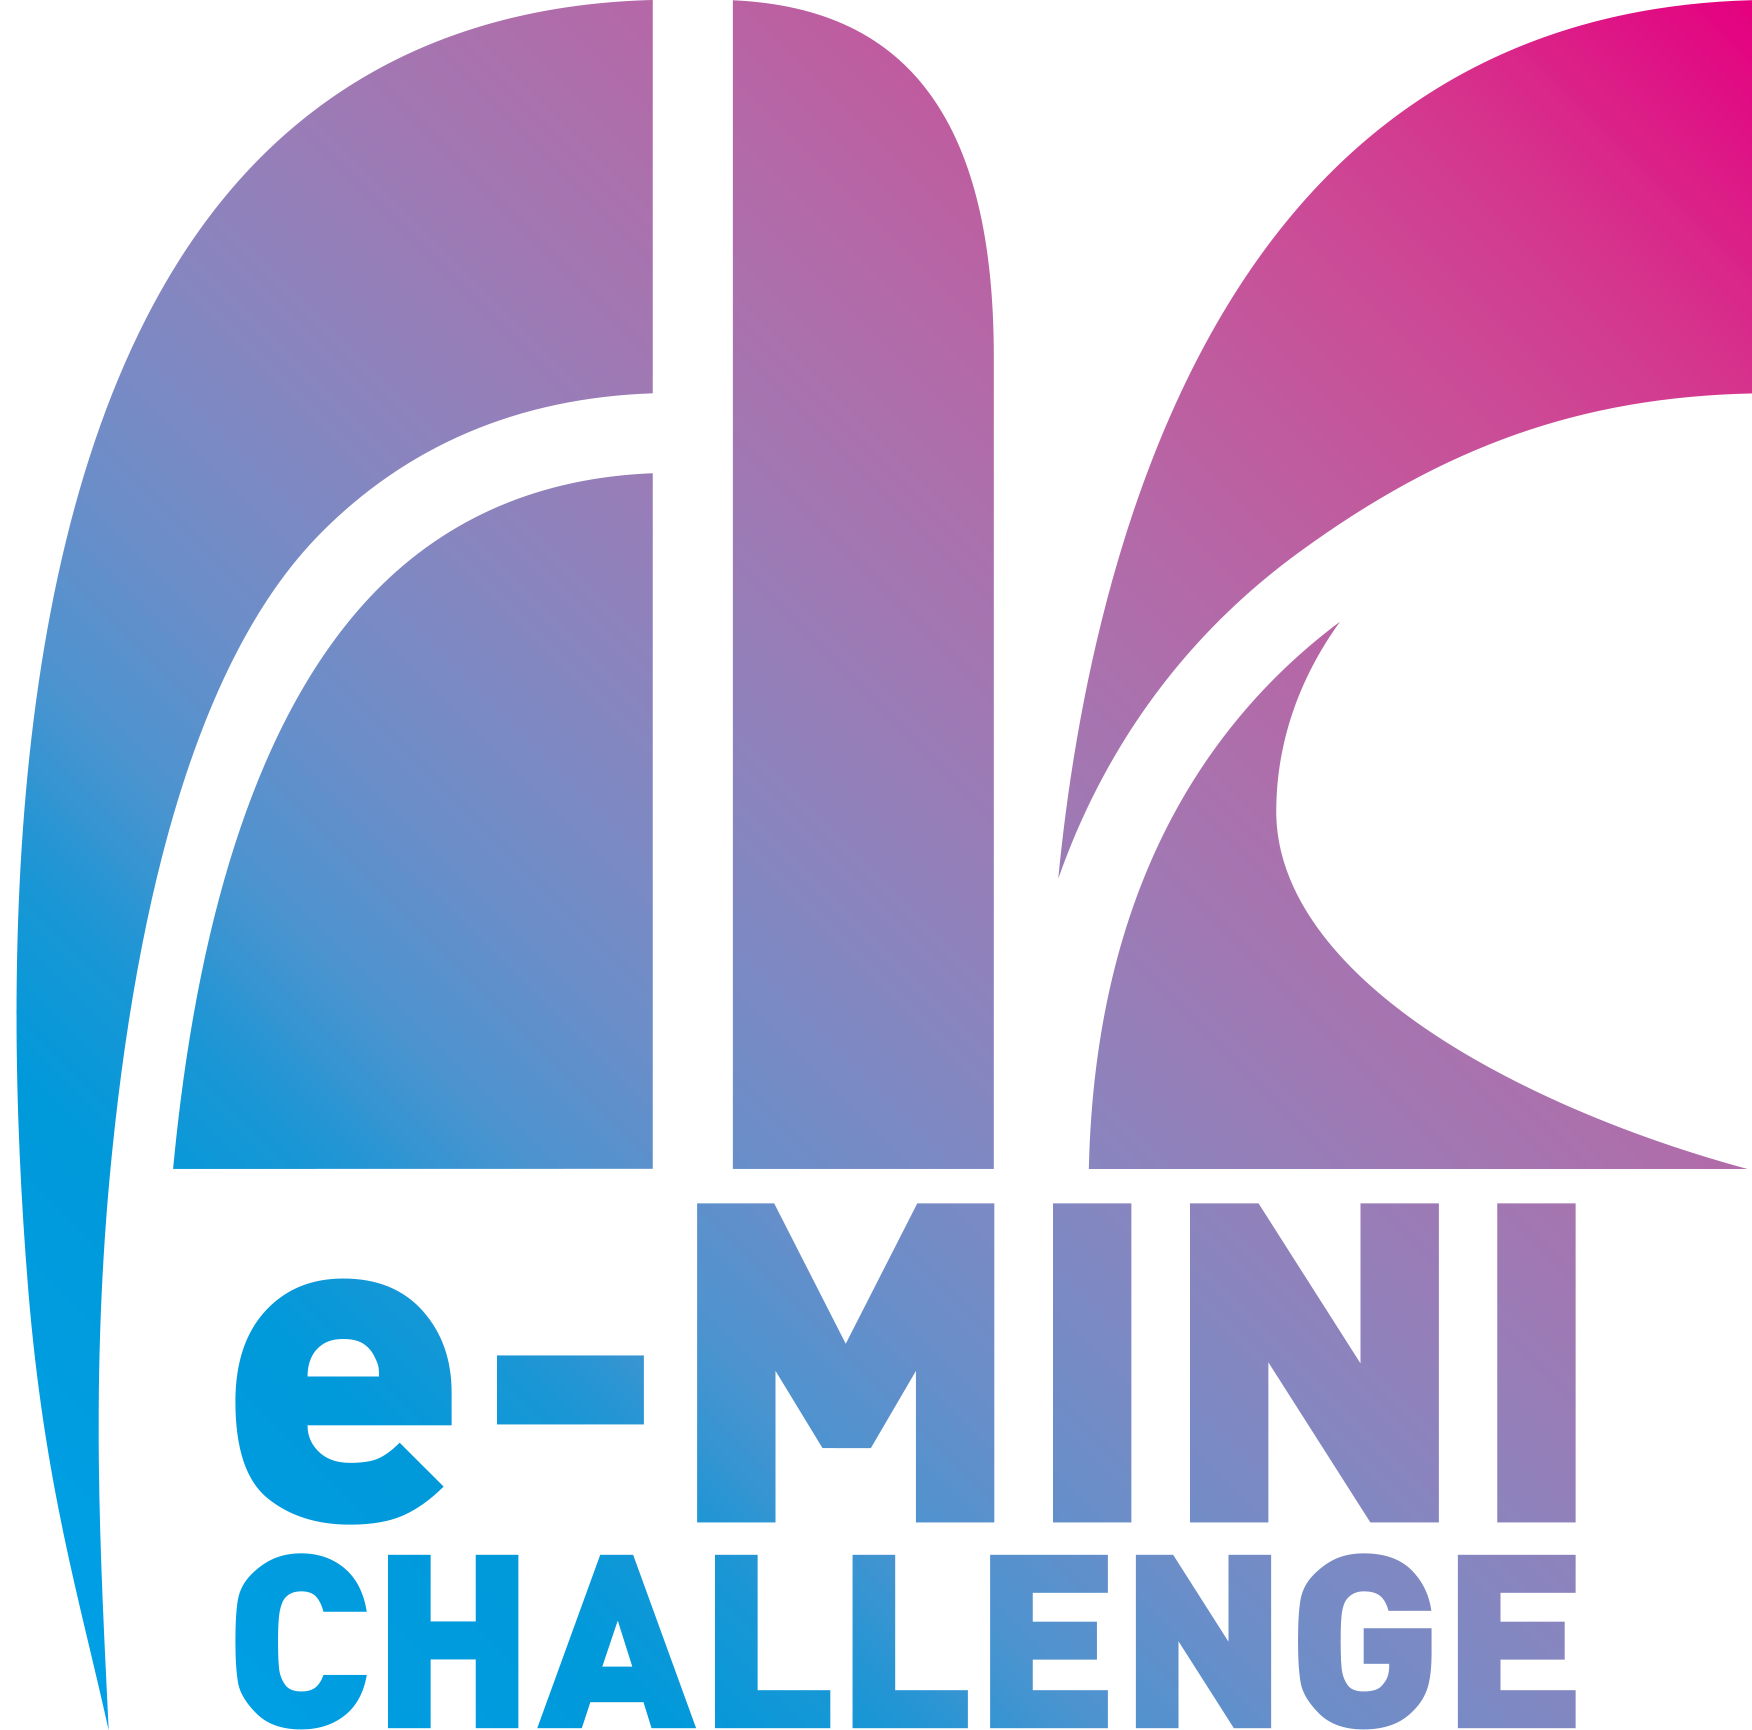 e-MINI CHALLENGE®2023 S1 Rd.1 ポイントランキング公開